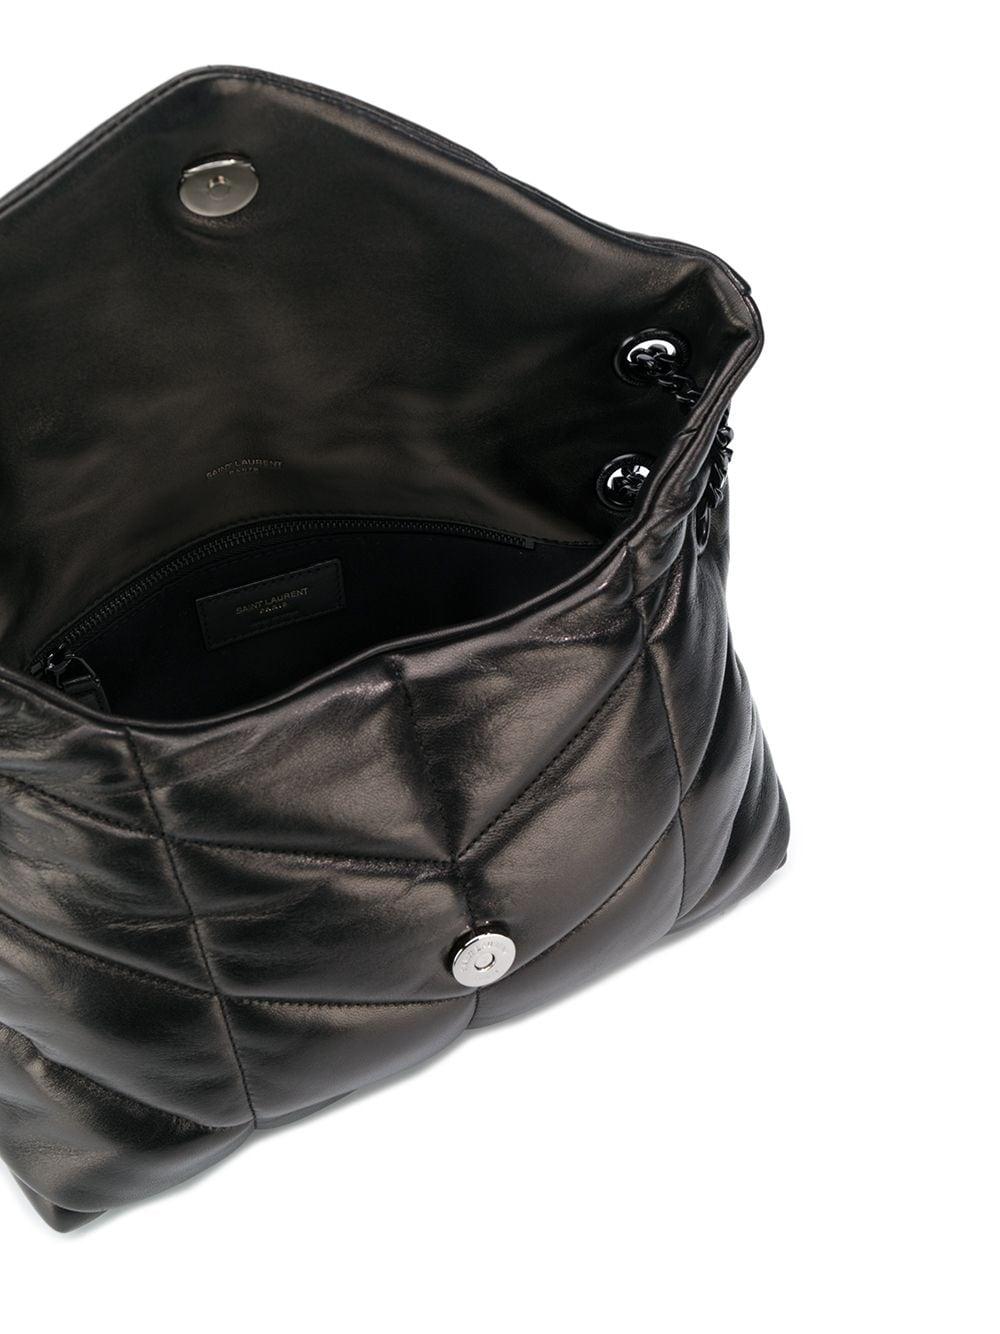 Saint Laurent Small Loulou Puffer Shoulder Bag - Black